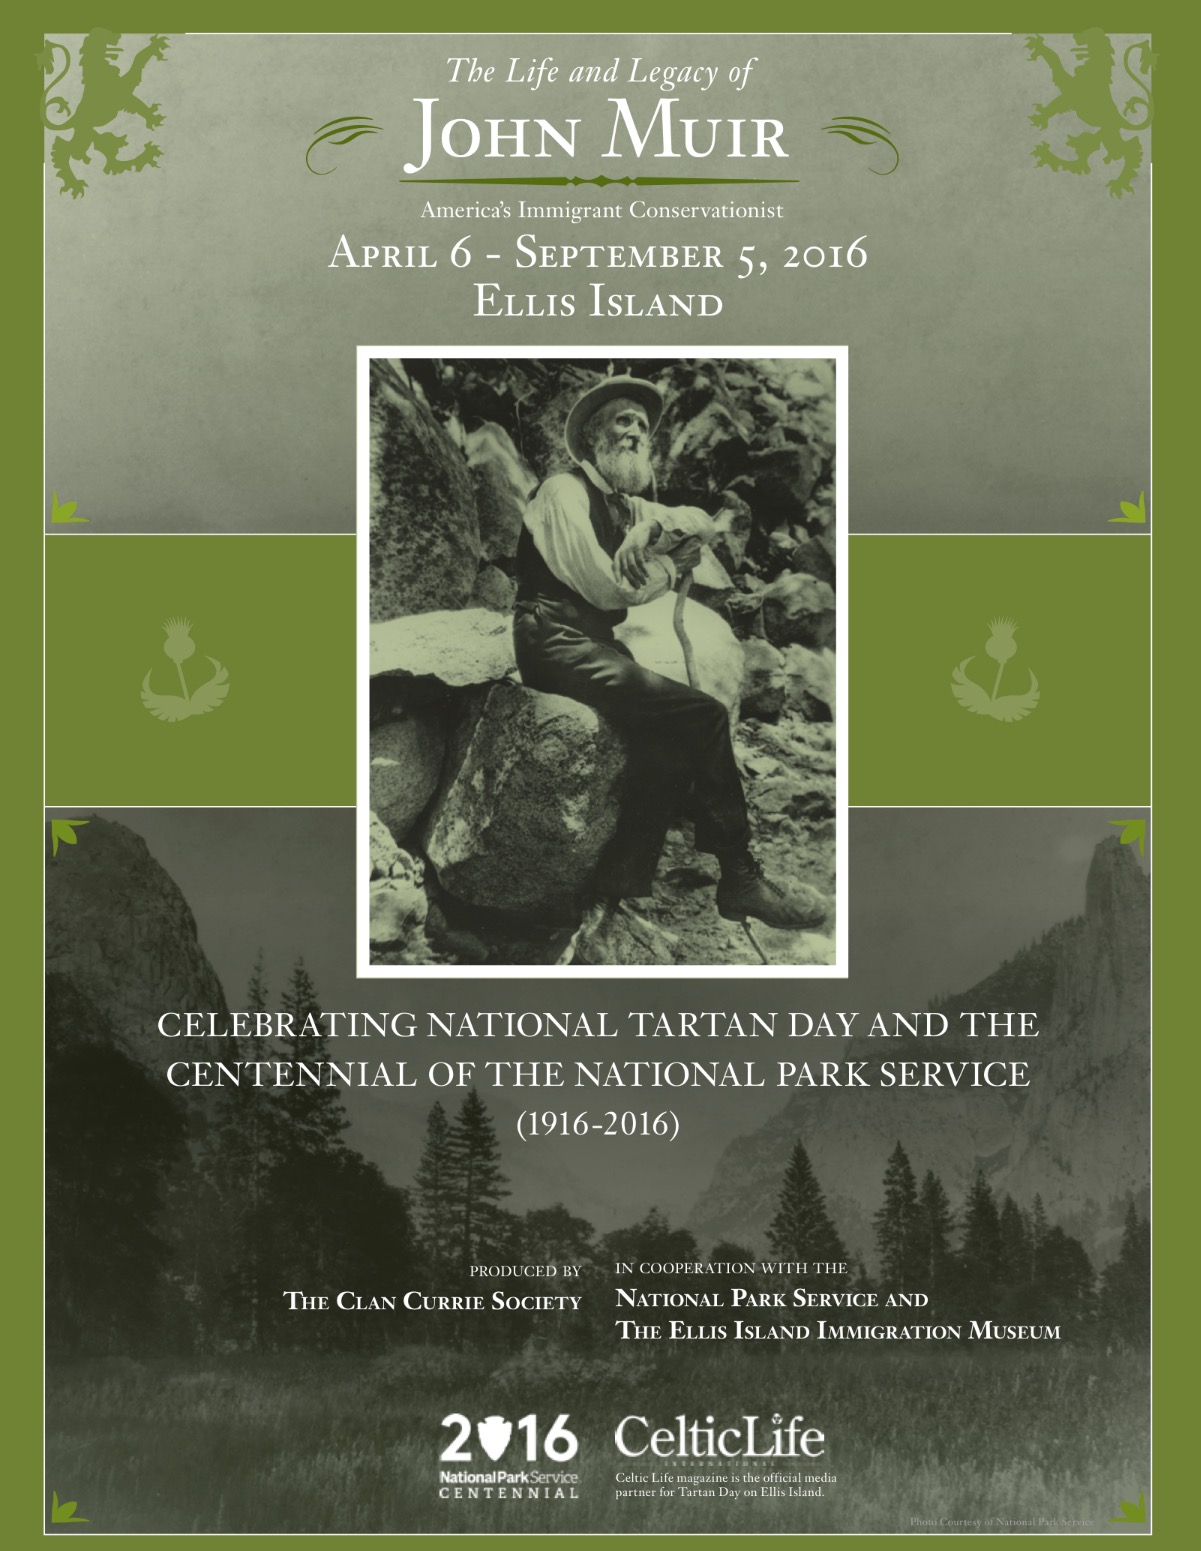 John Muir Exhibit Poster: Exhibit Information and B&W Photo of John Muir in Yosemite